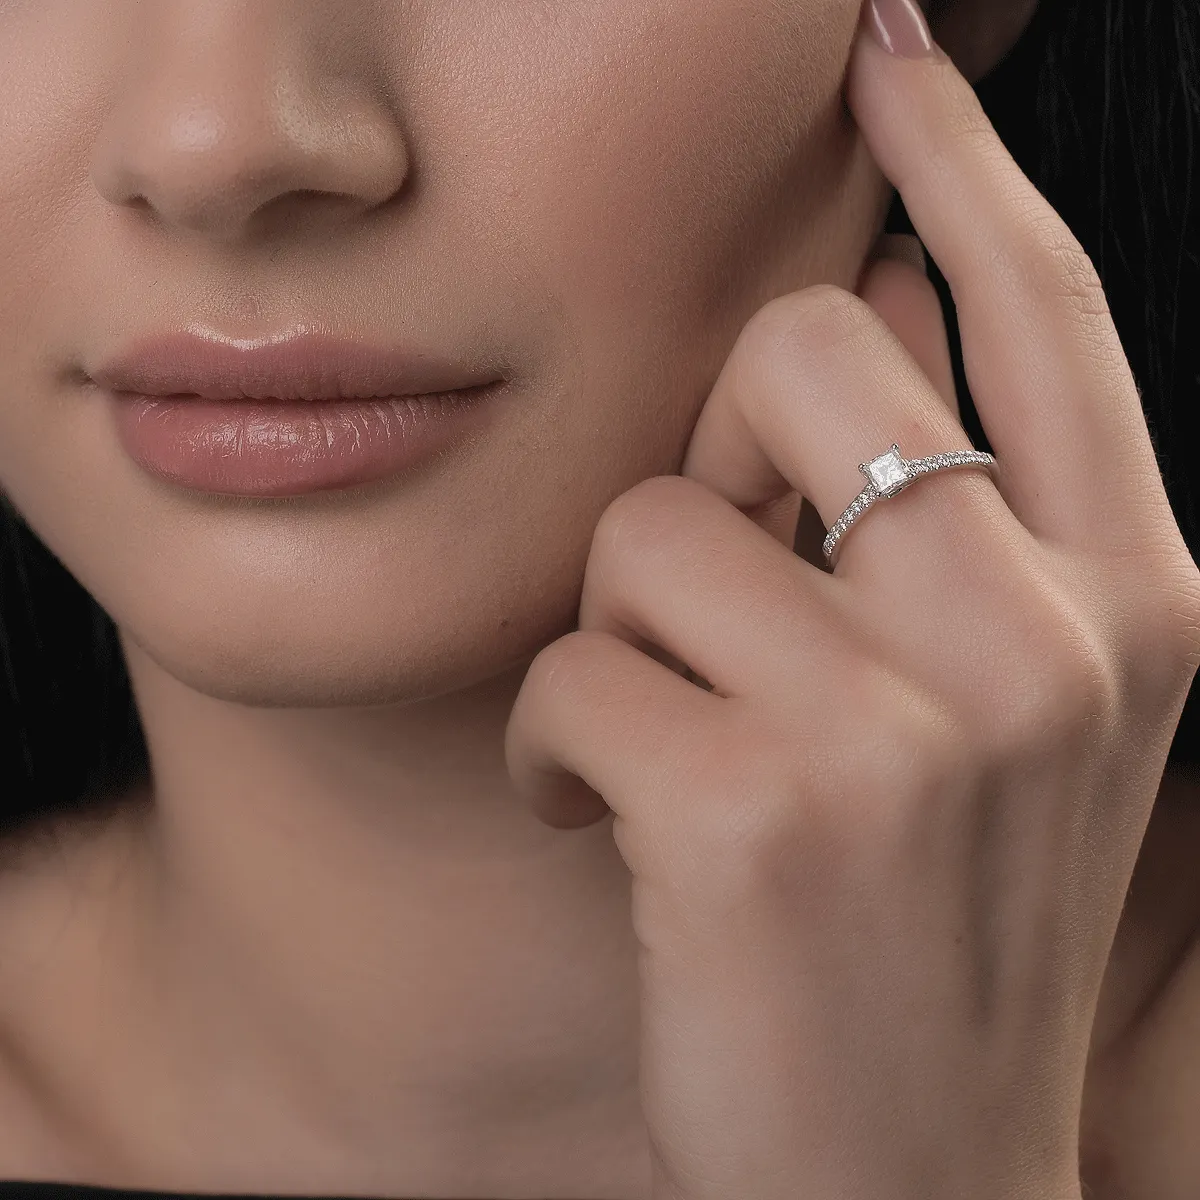 Inel de logodna din aur alb de 18K cu diamant de 0.24ct si diamante de 0.11ct